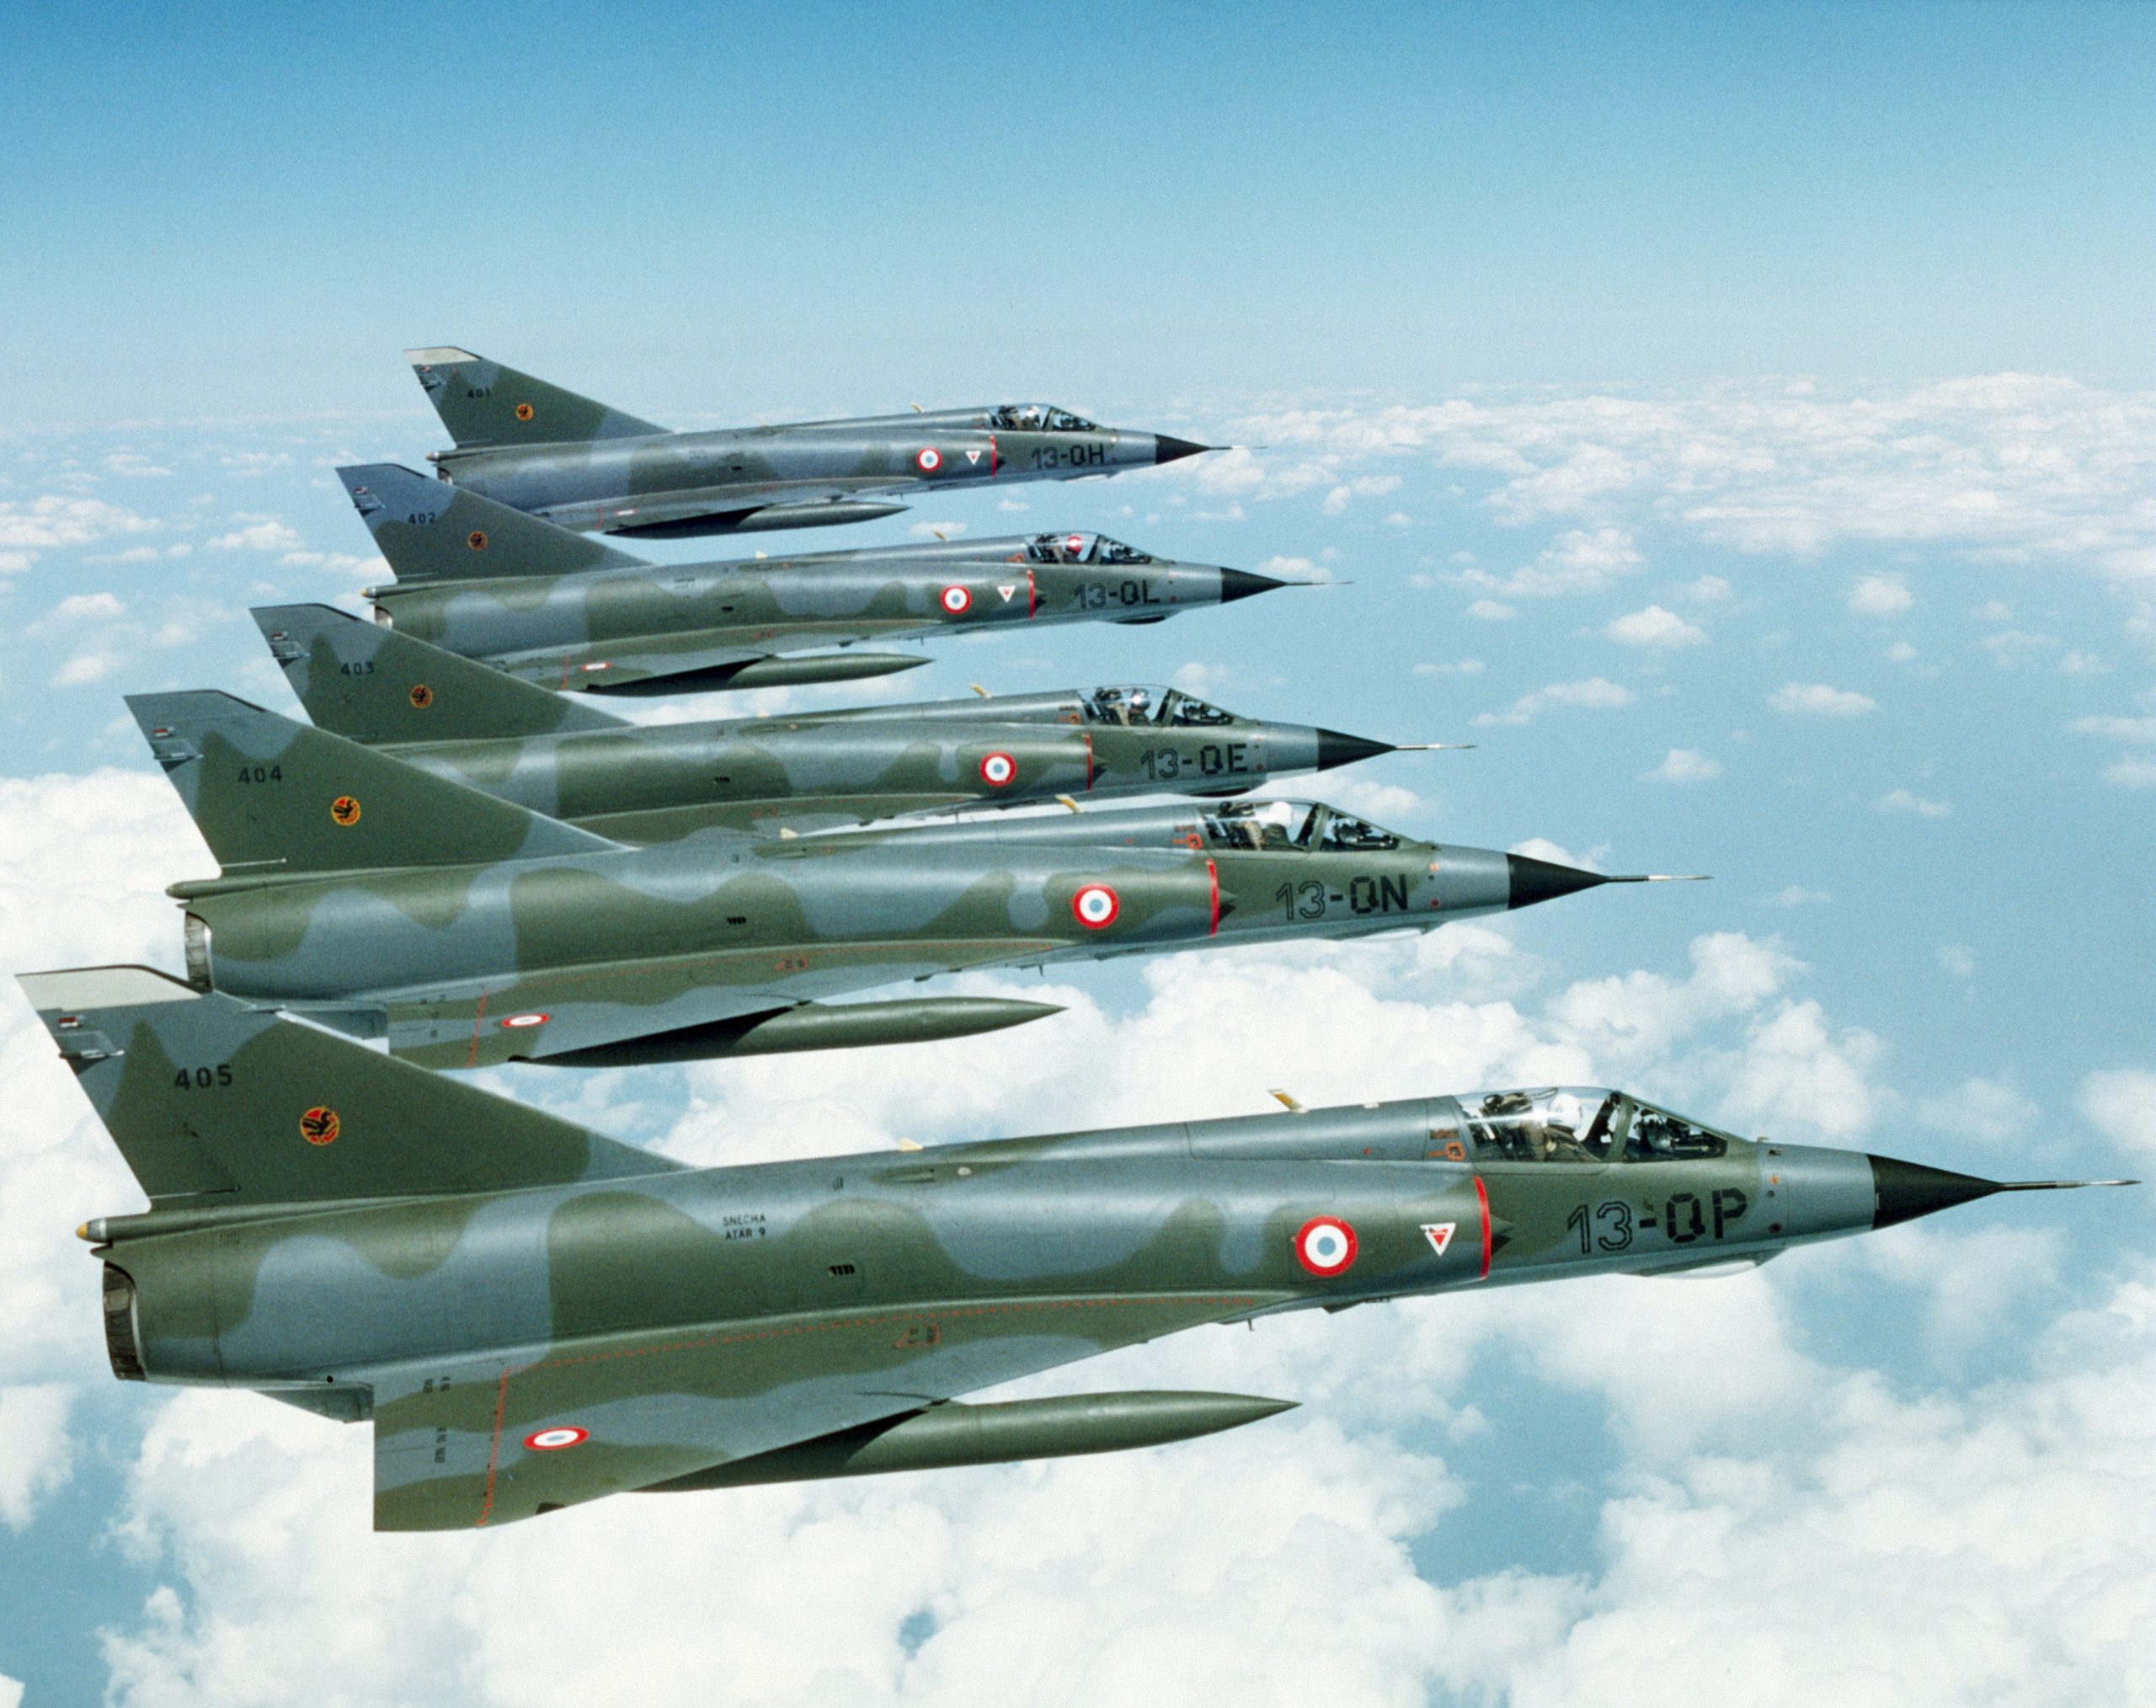 Dassault-Mirage-IIIE-da-Força-Aérea-Francesa-2-scaled.jpg